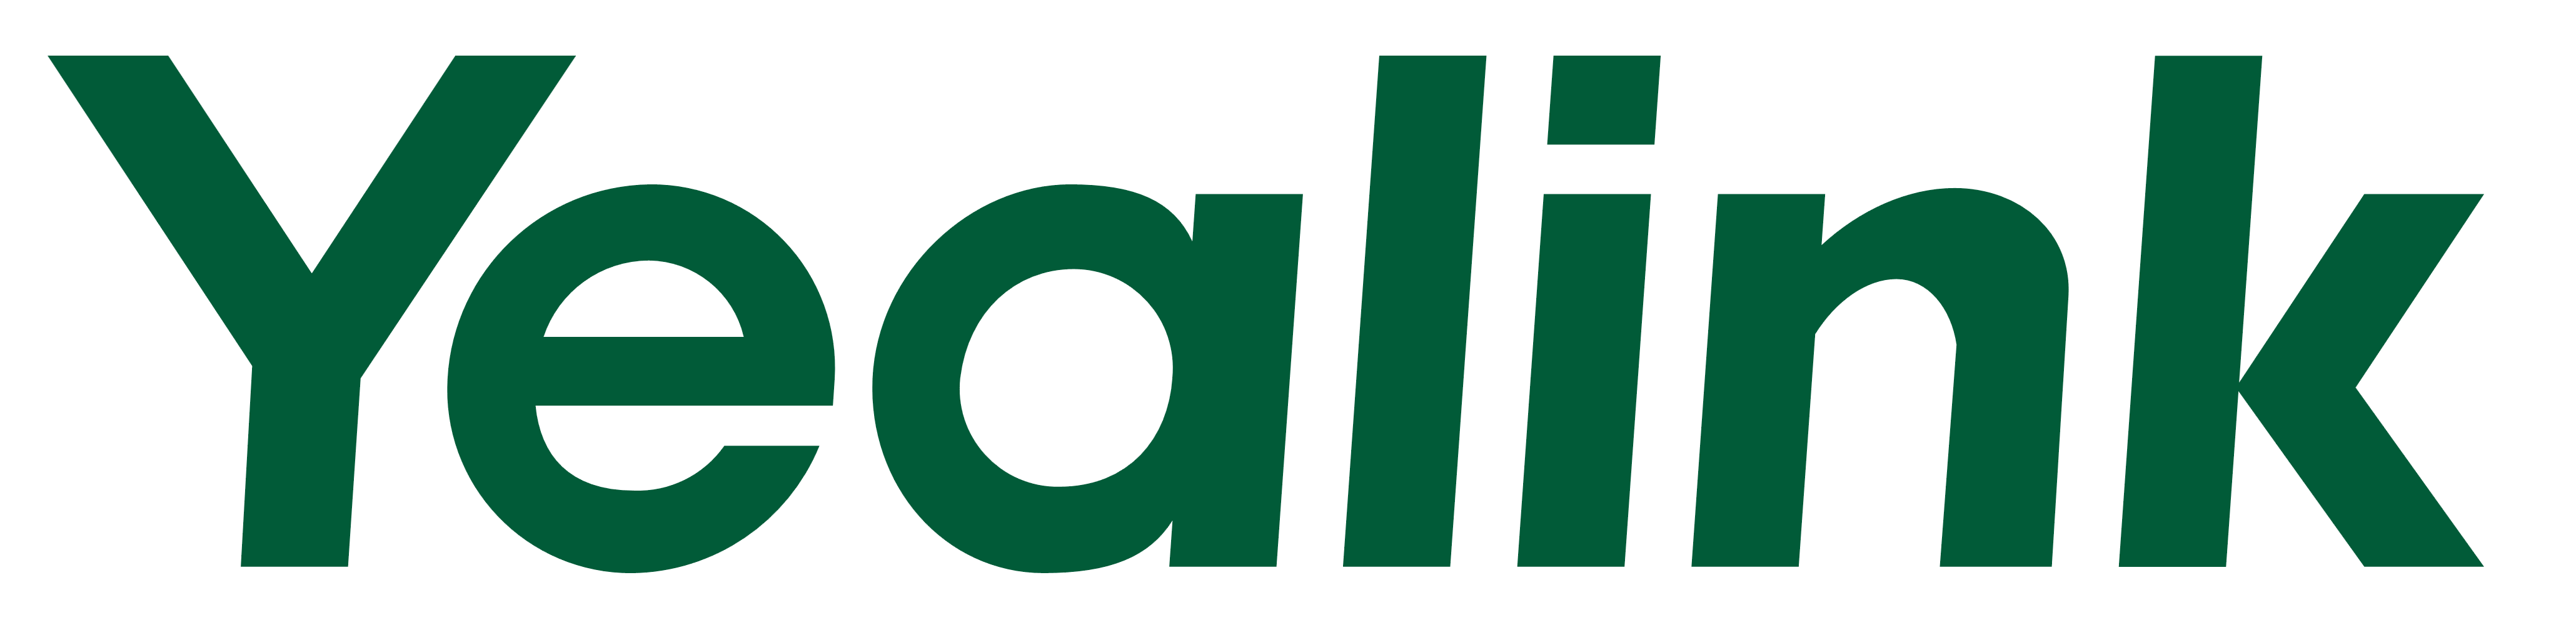 logo partner yealink indonesia